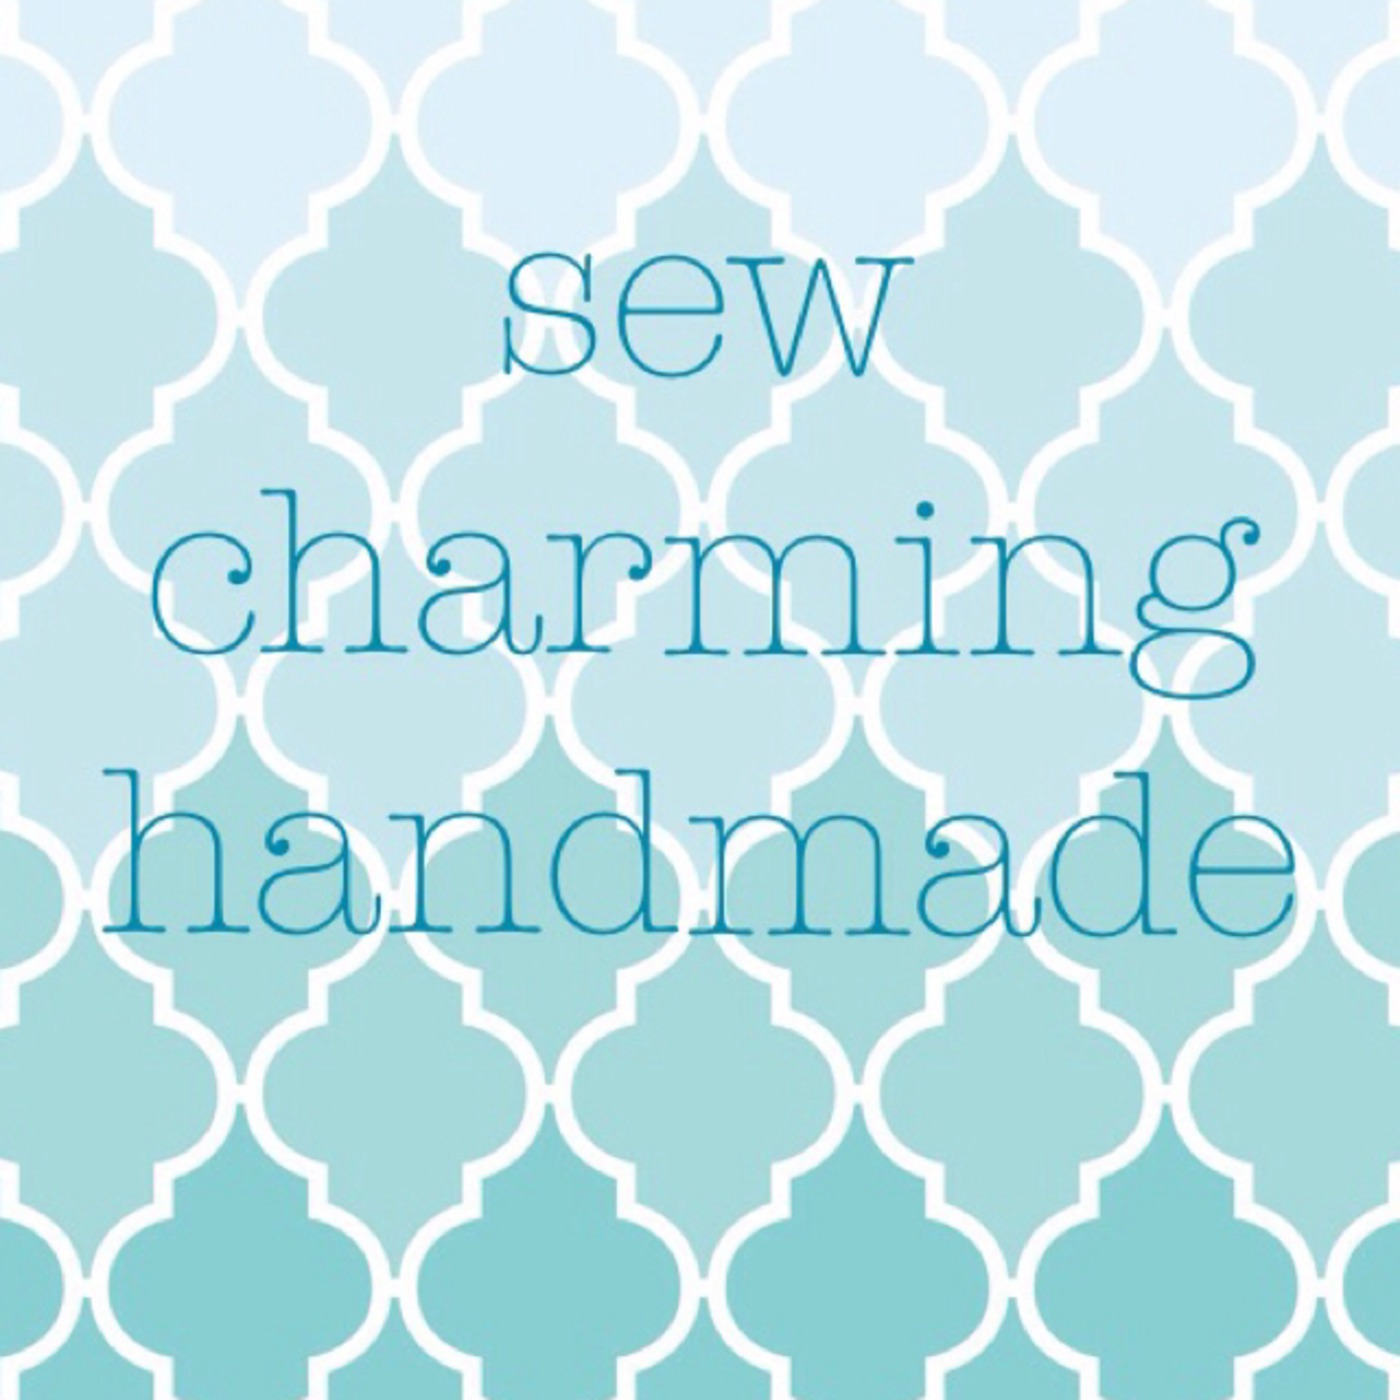 Welcome to Sew Charming Handmade